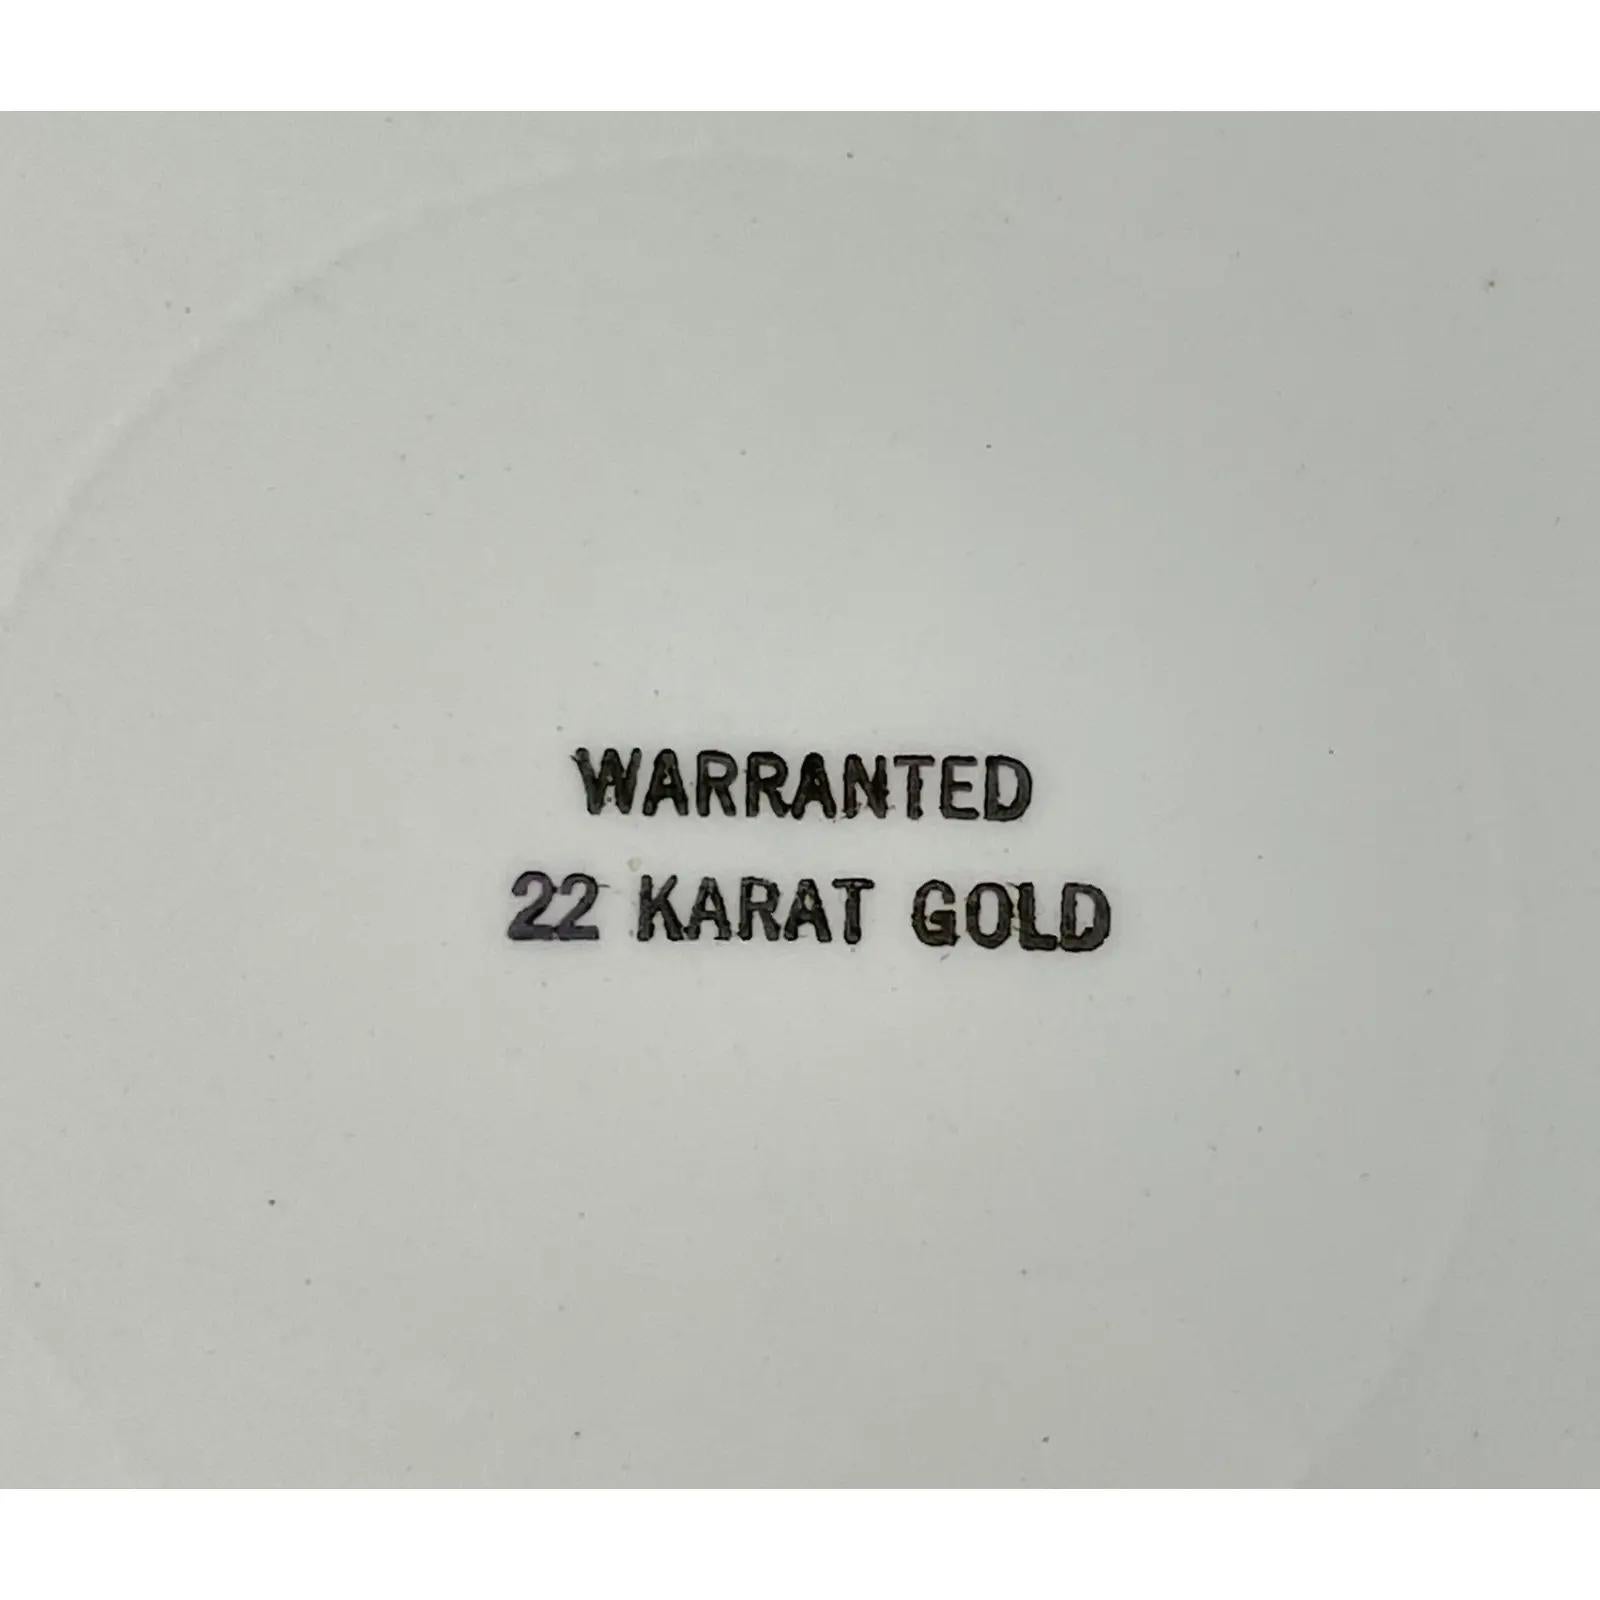 Federal Style Sabin Crest -O- Gold Warranted 22K Gold Dinner Plate, Set of 6 For Sale 4